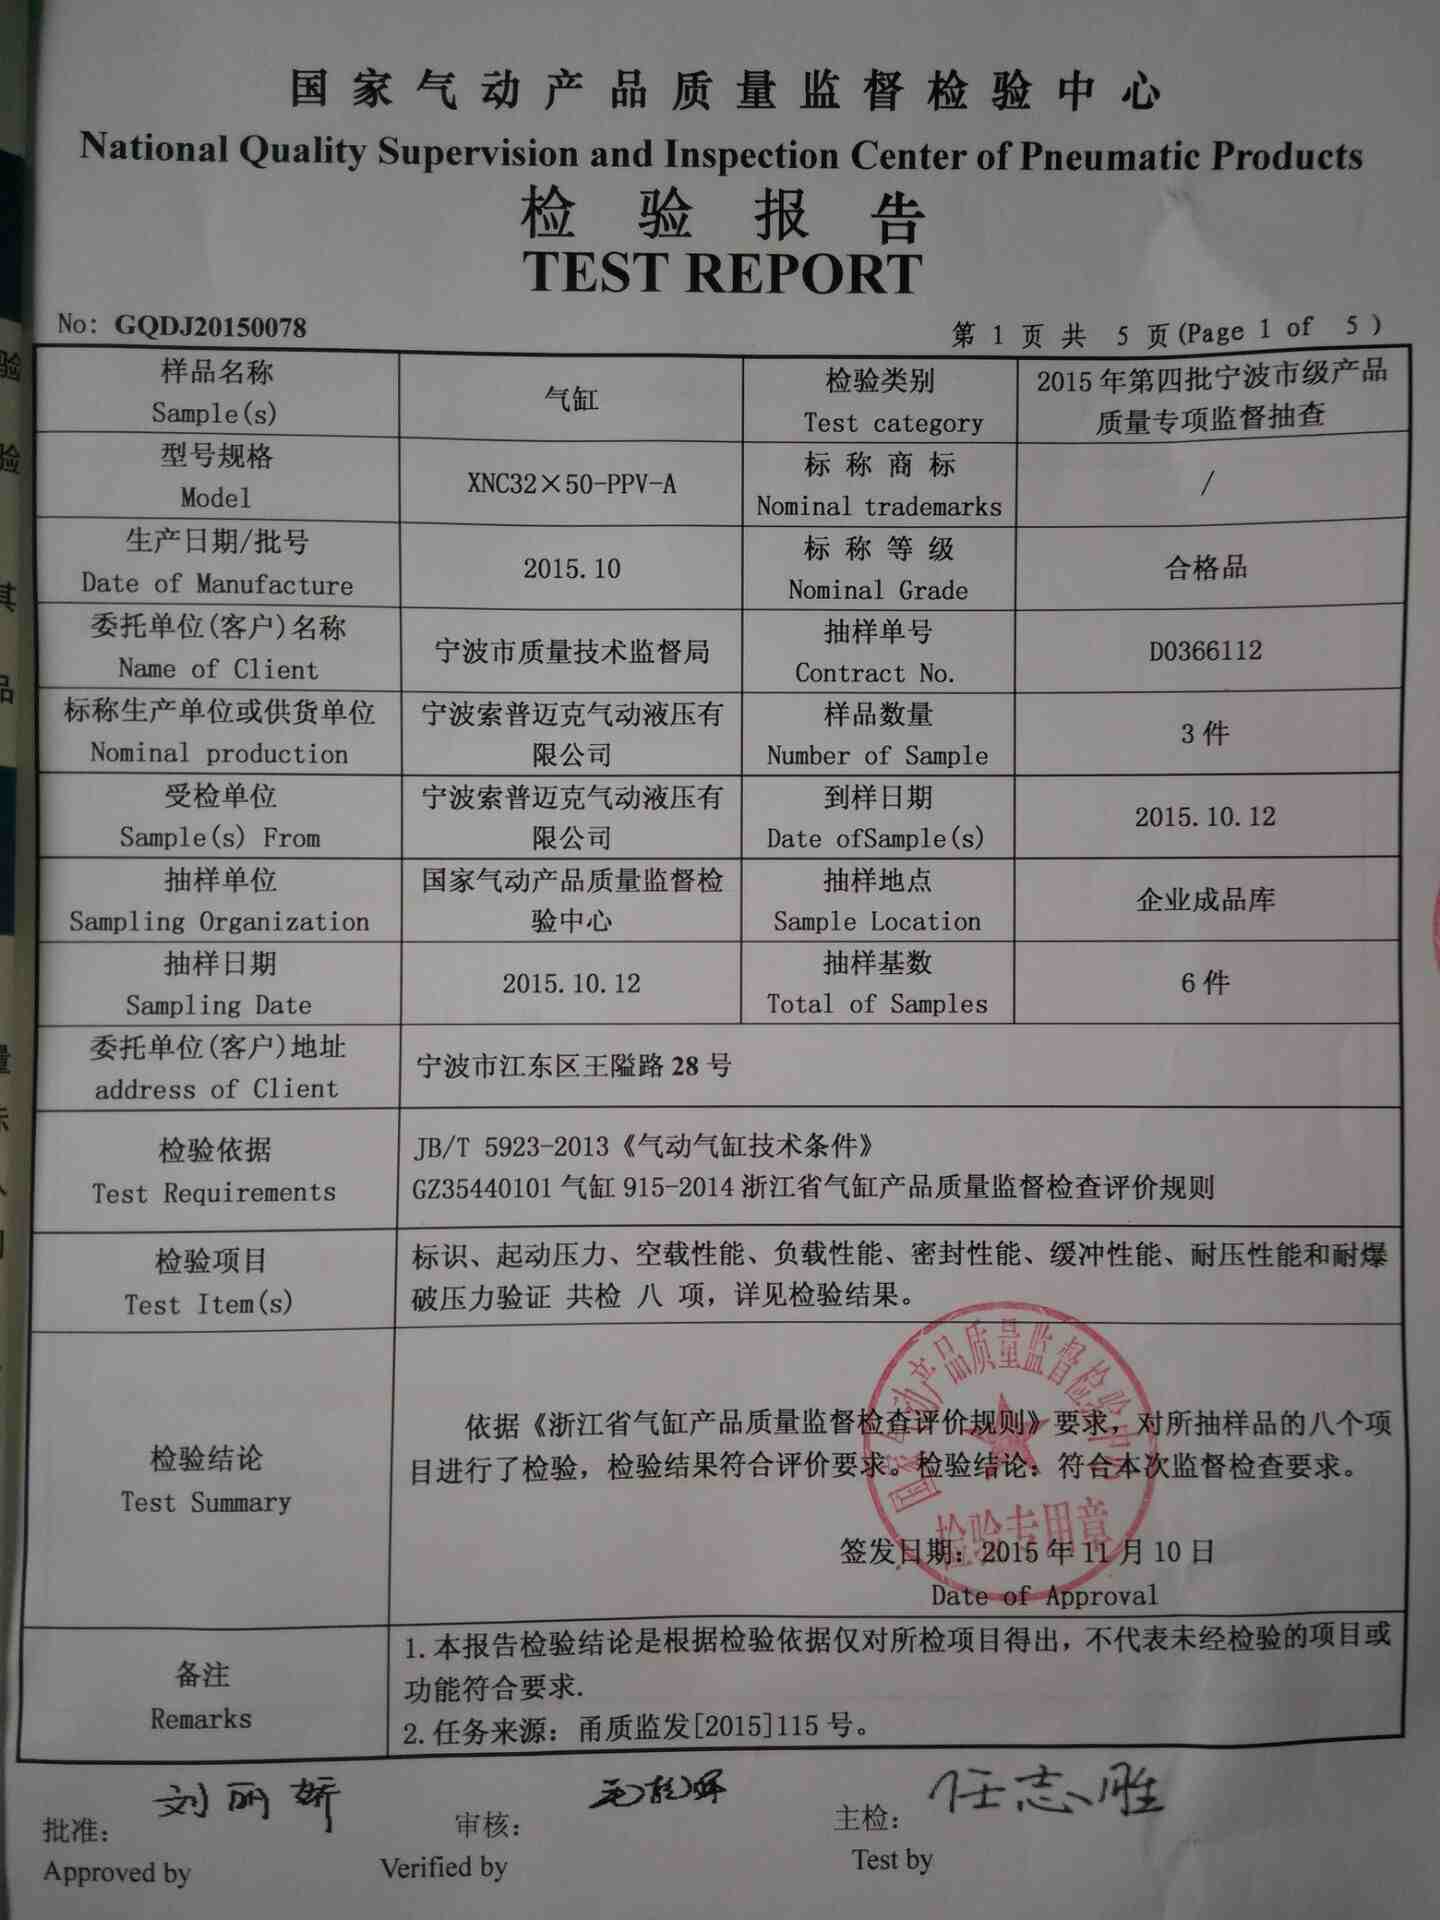 Test Report 2015